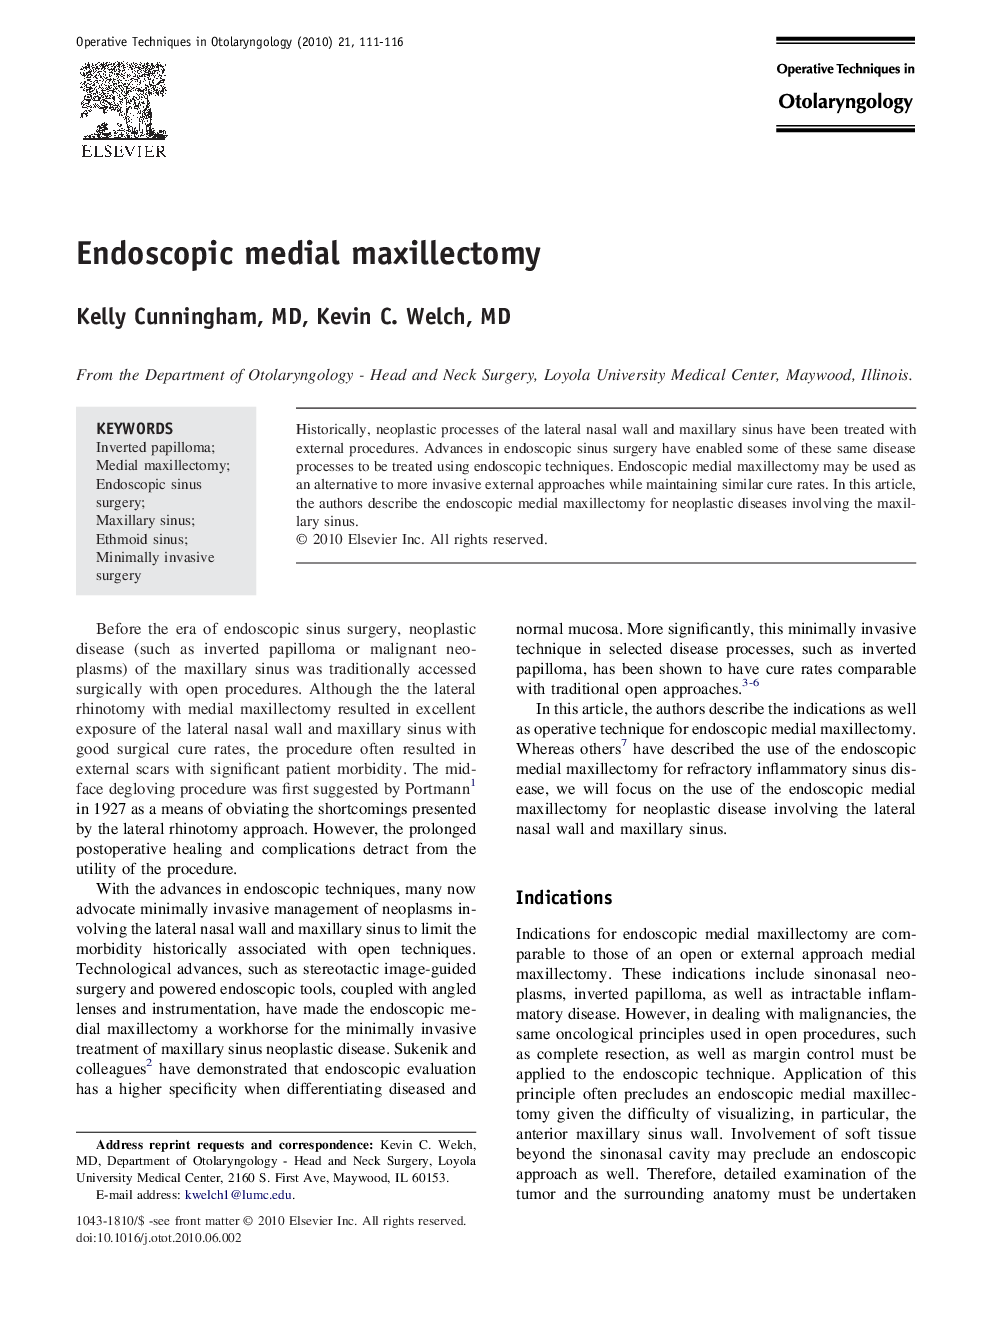 Endoscopic medial maxillectomy